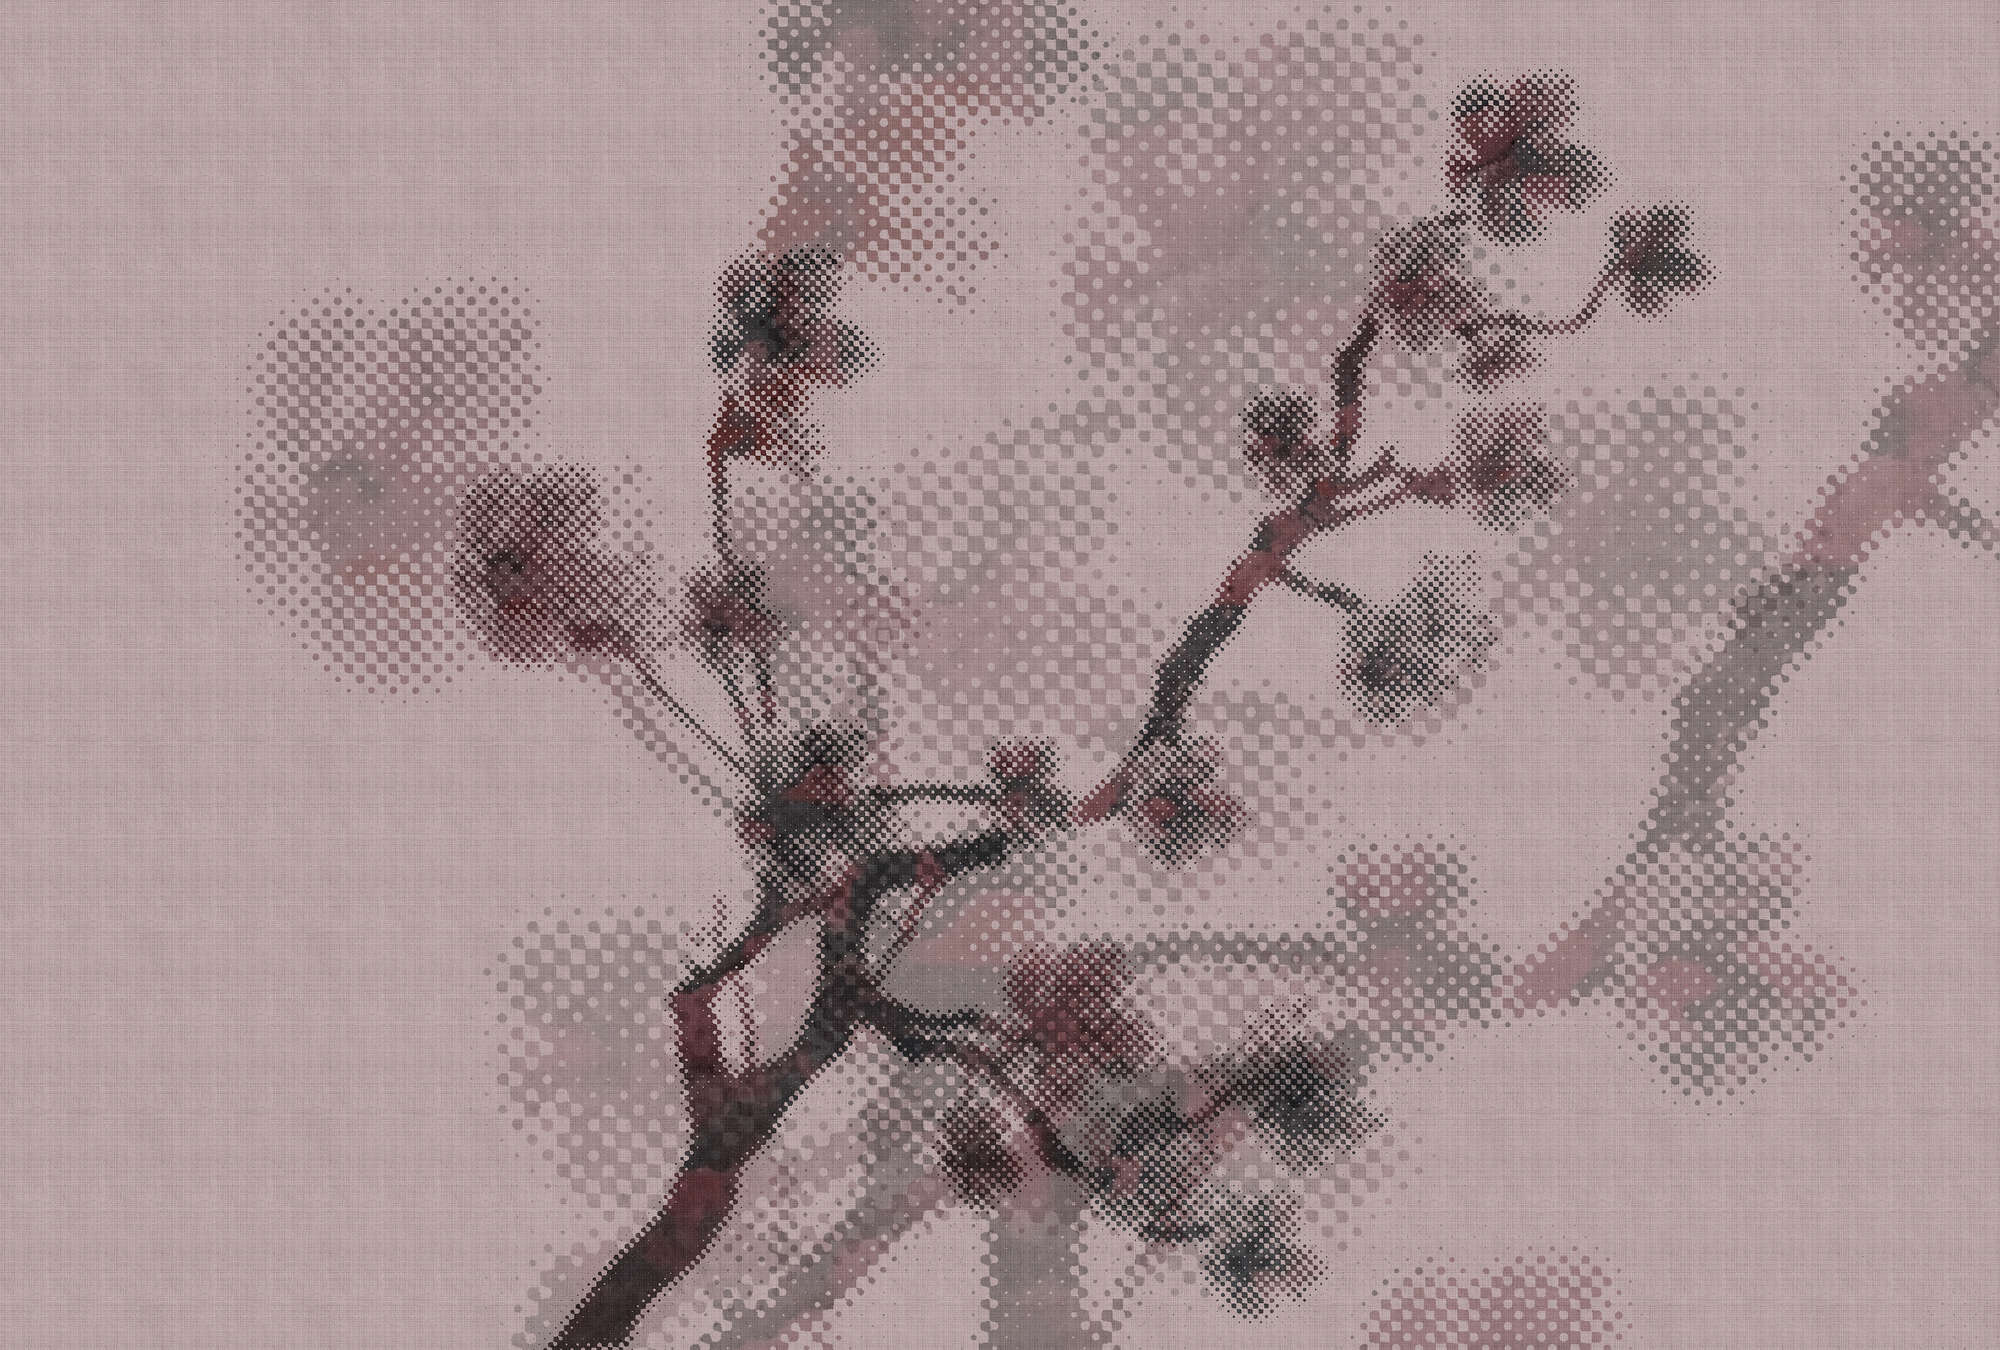             Twigs 3 - Fototapete mit Natur- Motiv & Pixeldesign - naturleinen Struktur – Rosa | Perlmutt Glattvlies
        